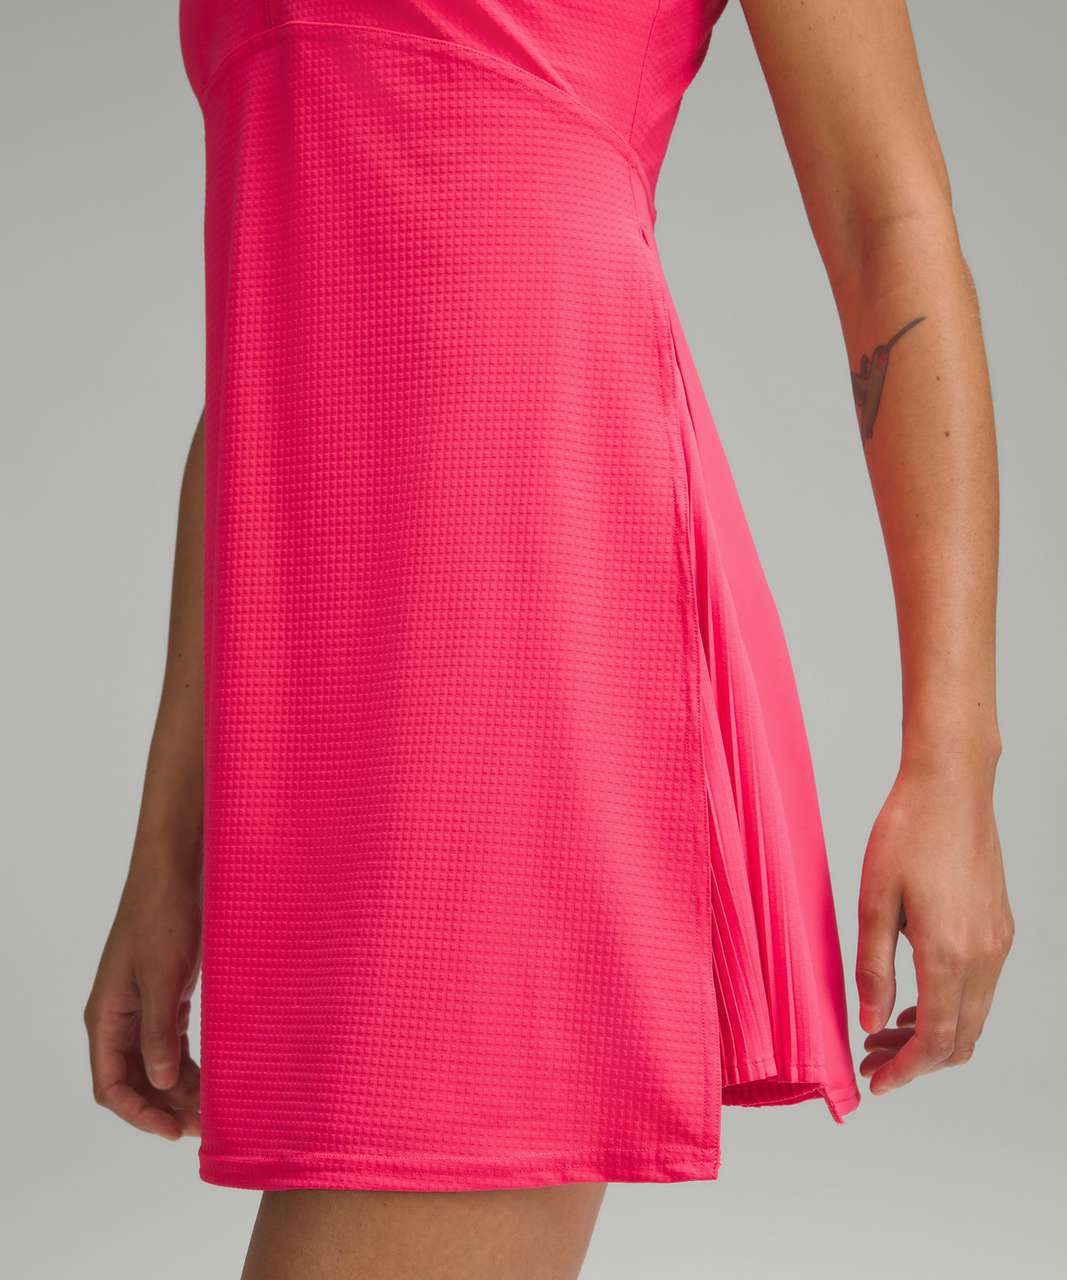 Lululemon Grid-Texture Sleeveless Tennis Dress - Lip Gloss